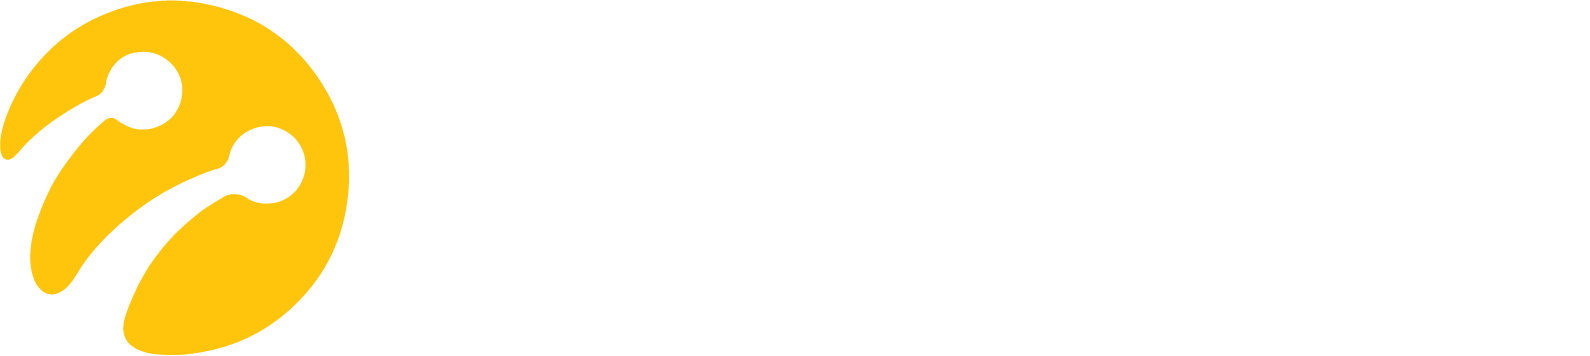 Turkcell Logo groß für dunkle Hintergründe (transparentes PNG)